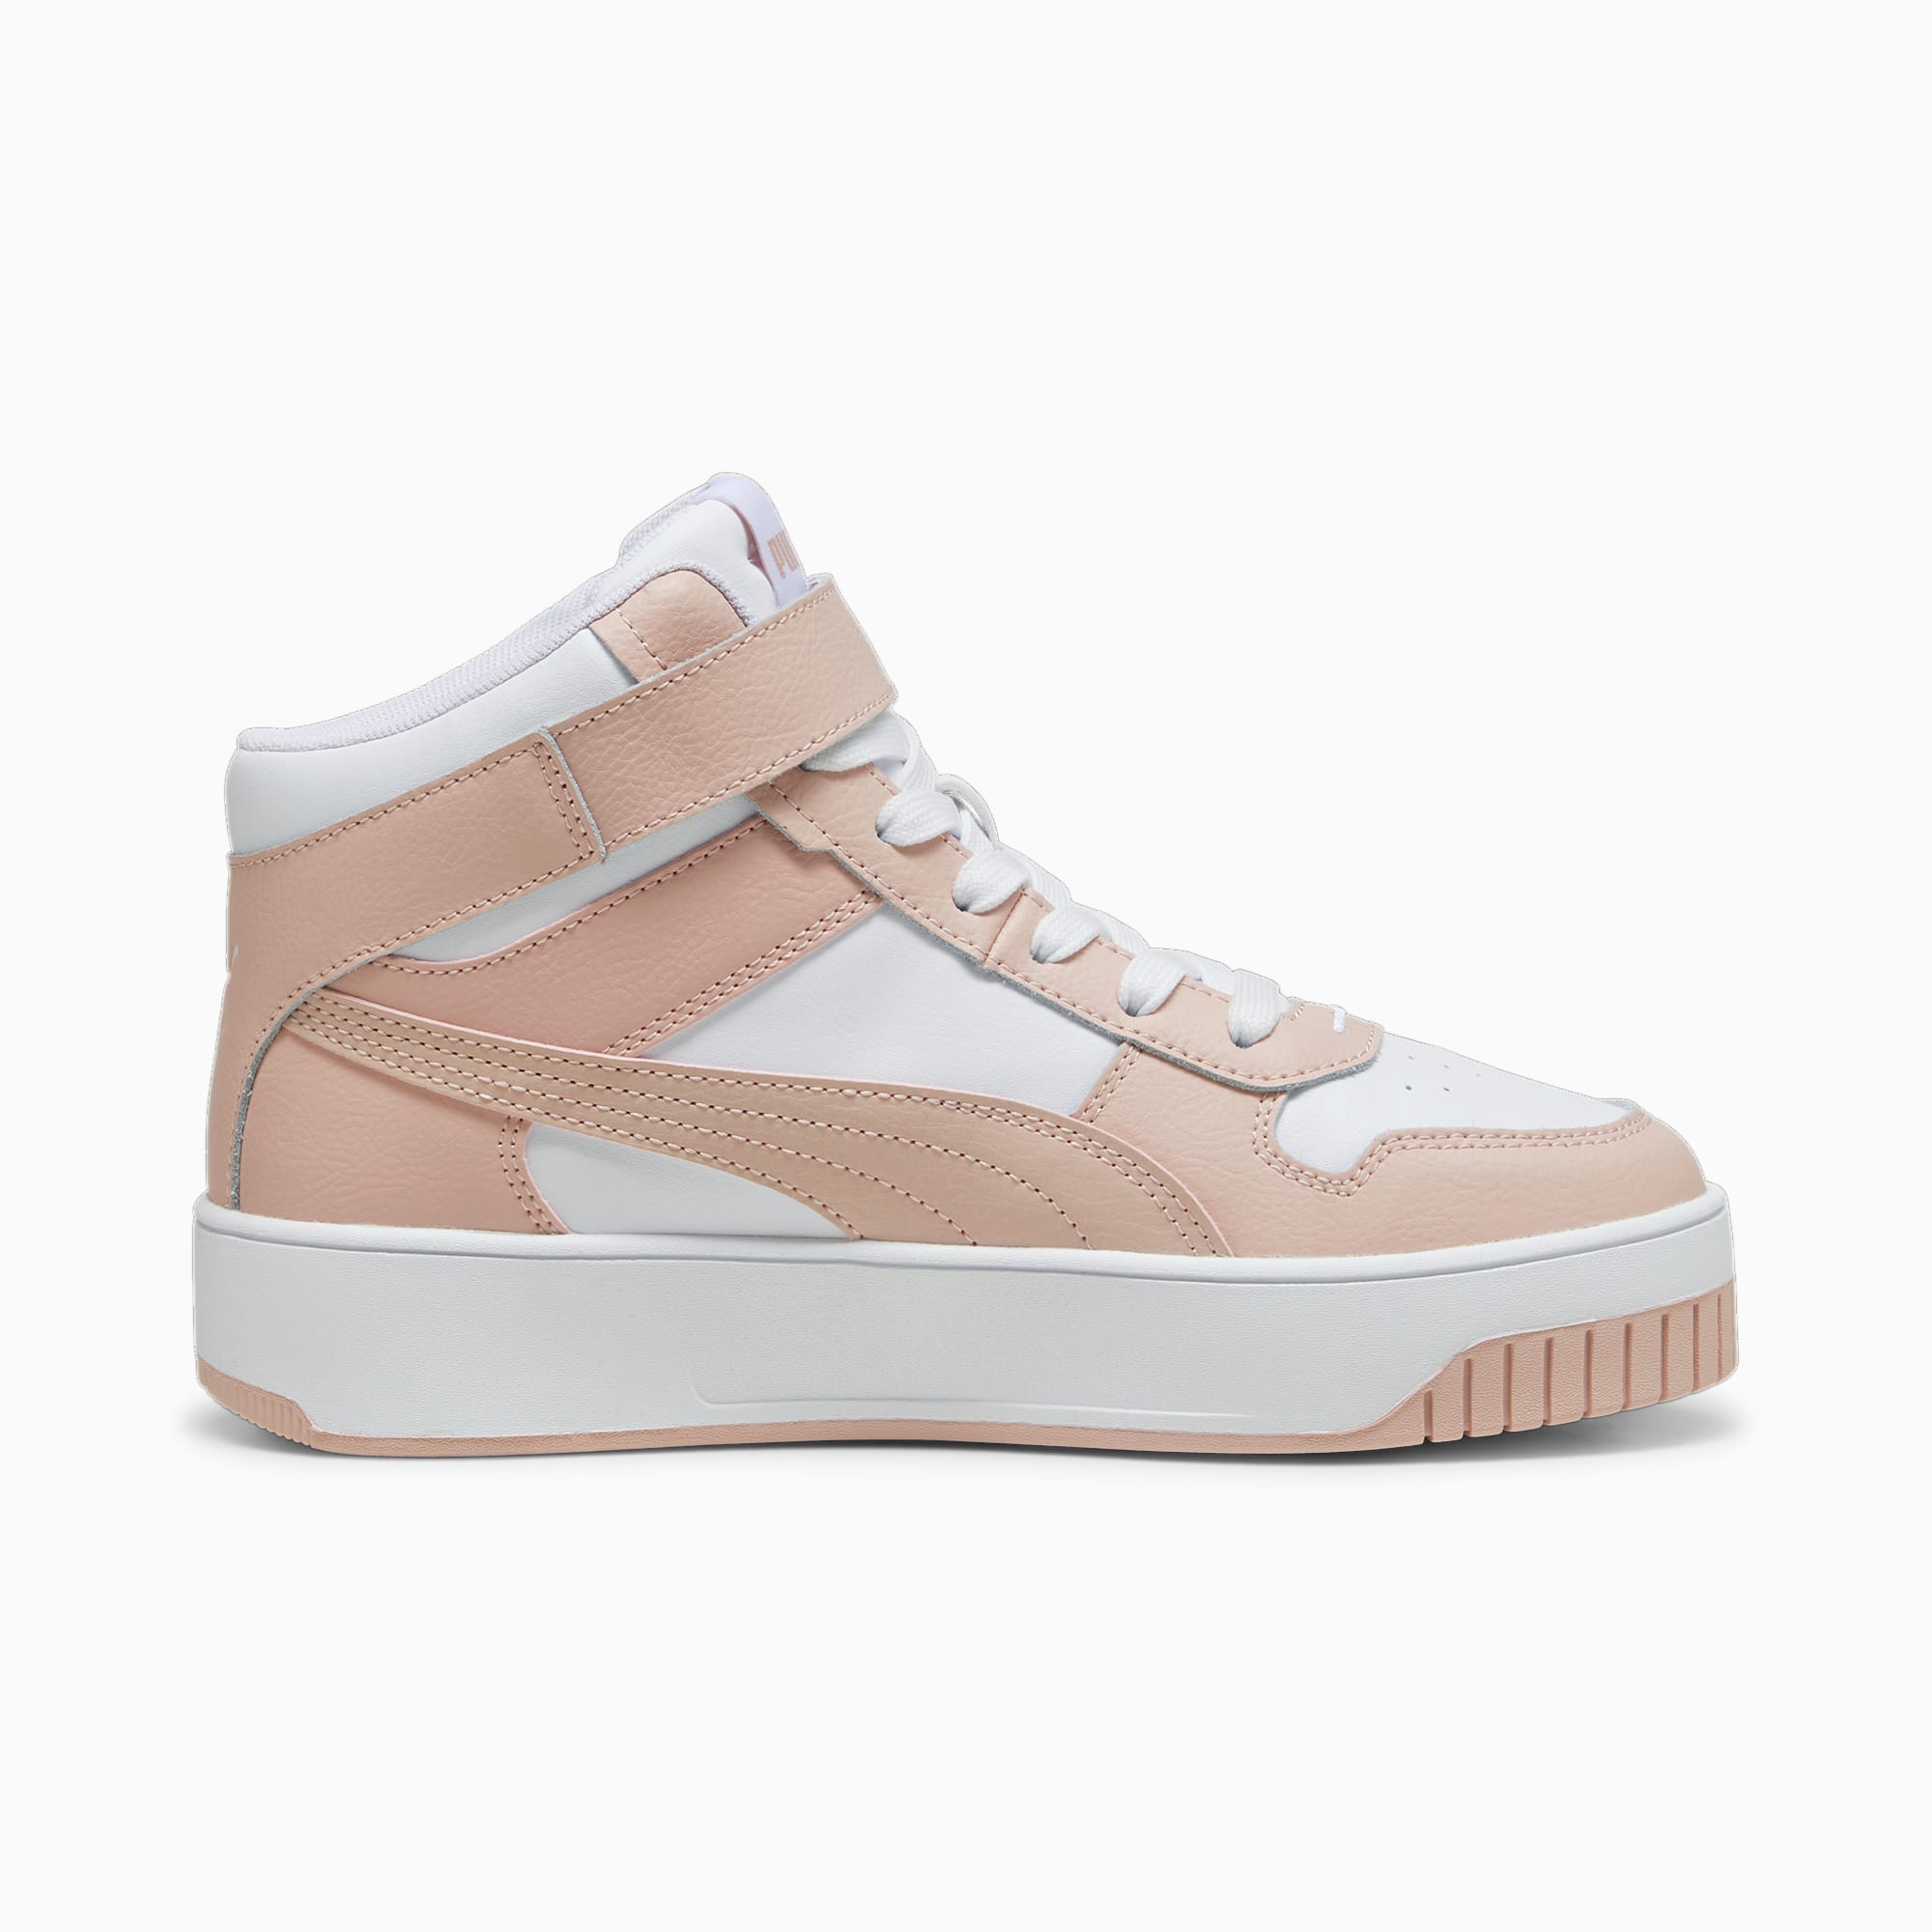 PUMA Carina Street Mid Women's Sneakers, White/Rose Quartz, Size 39, Shoes